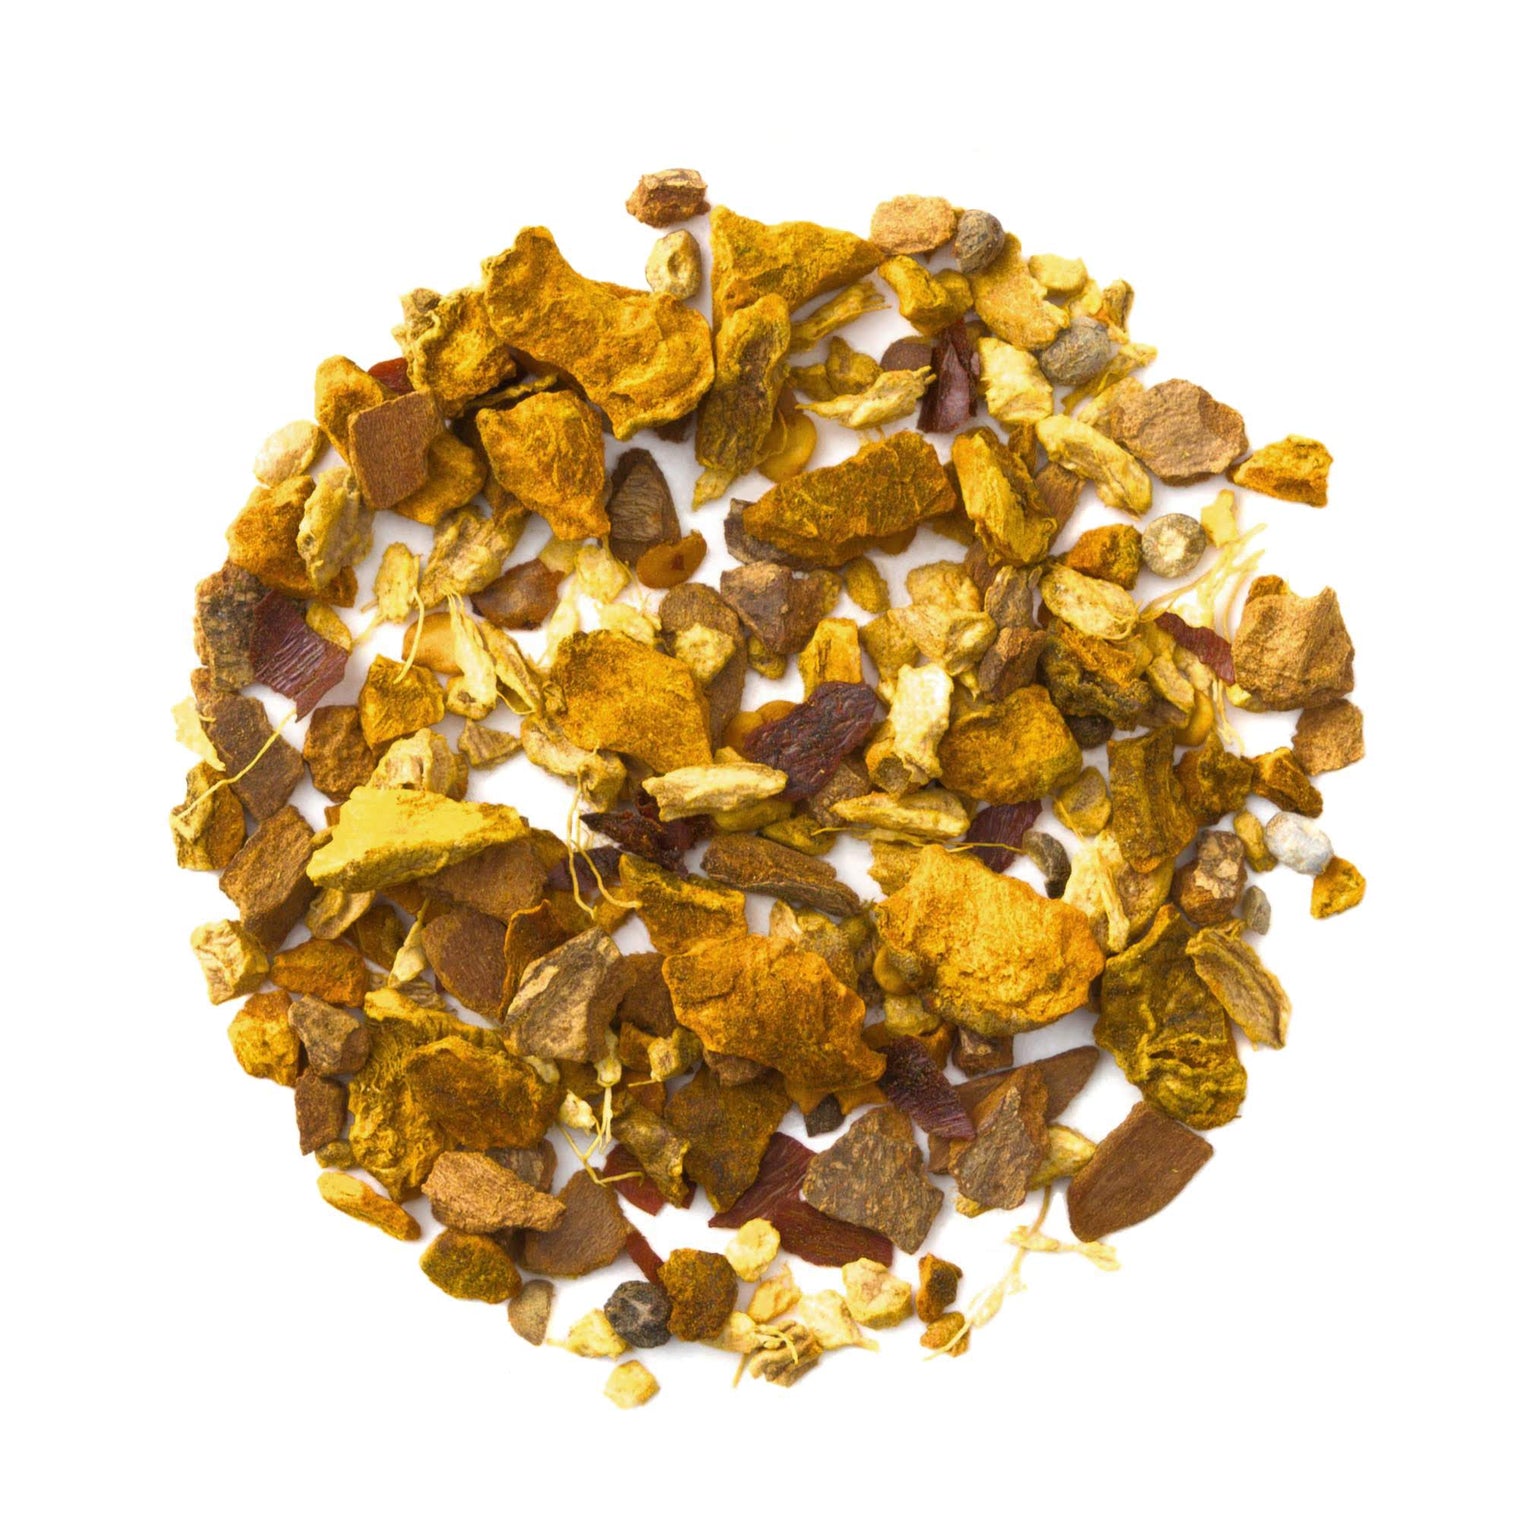 Ayurvedic Medicine: Seeking Wellness Through Tea - Health Benefits of Tea - Heavenly Tea Leaves Blog